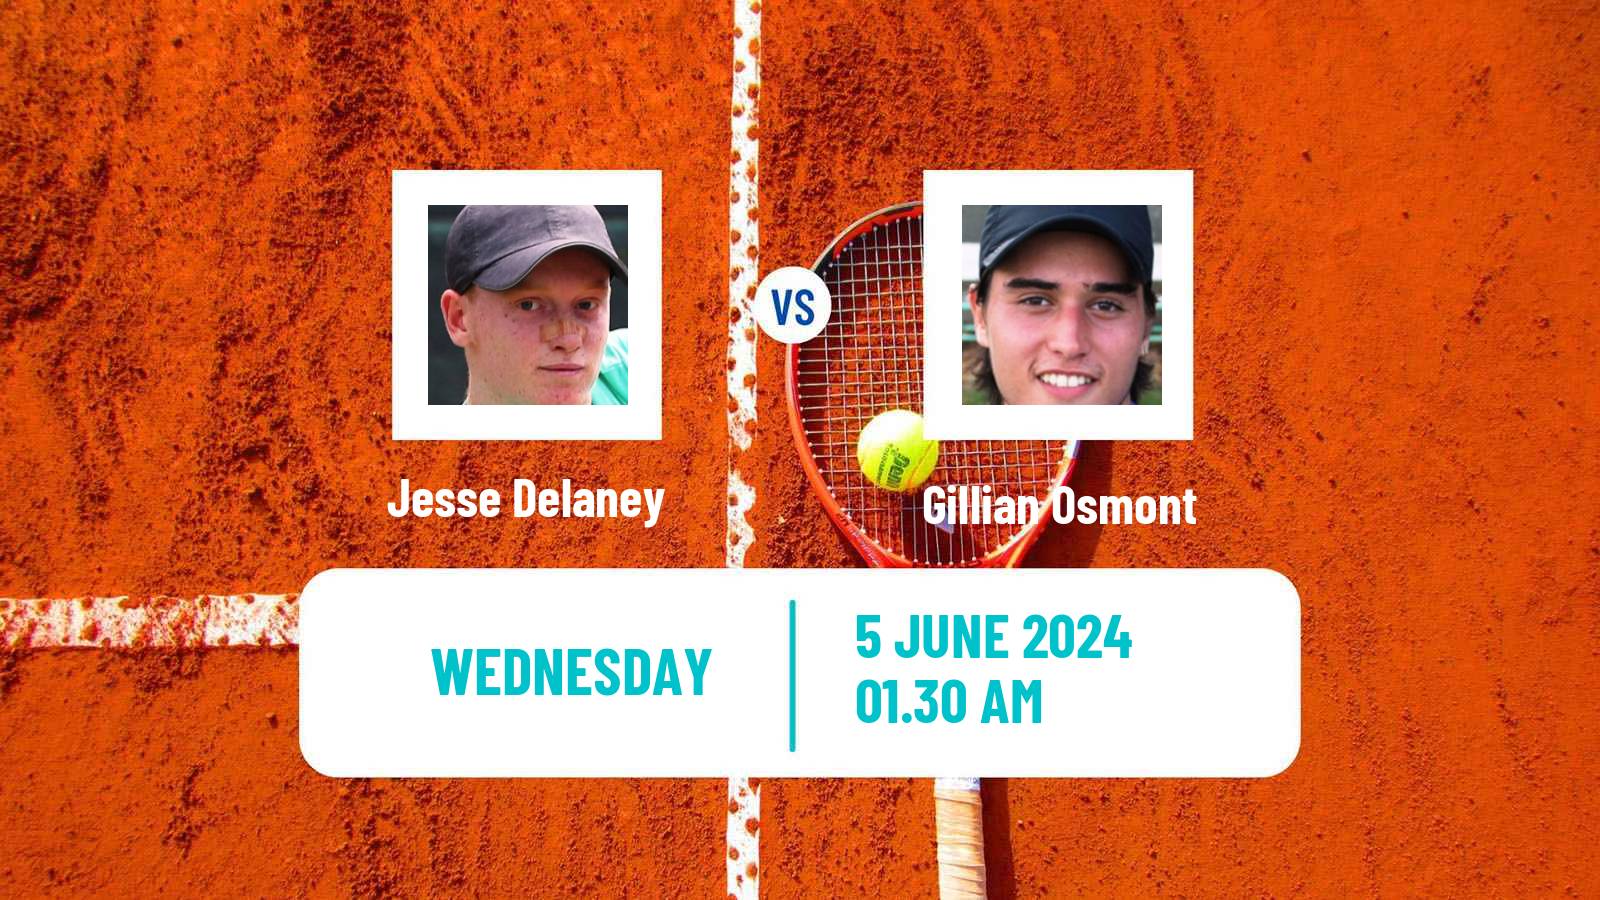 Tennis ITF M15 Harmon Men Jesse Delaney - Gillian Osmont